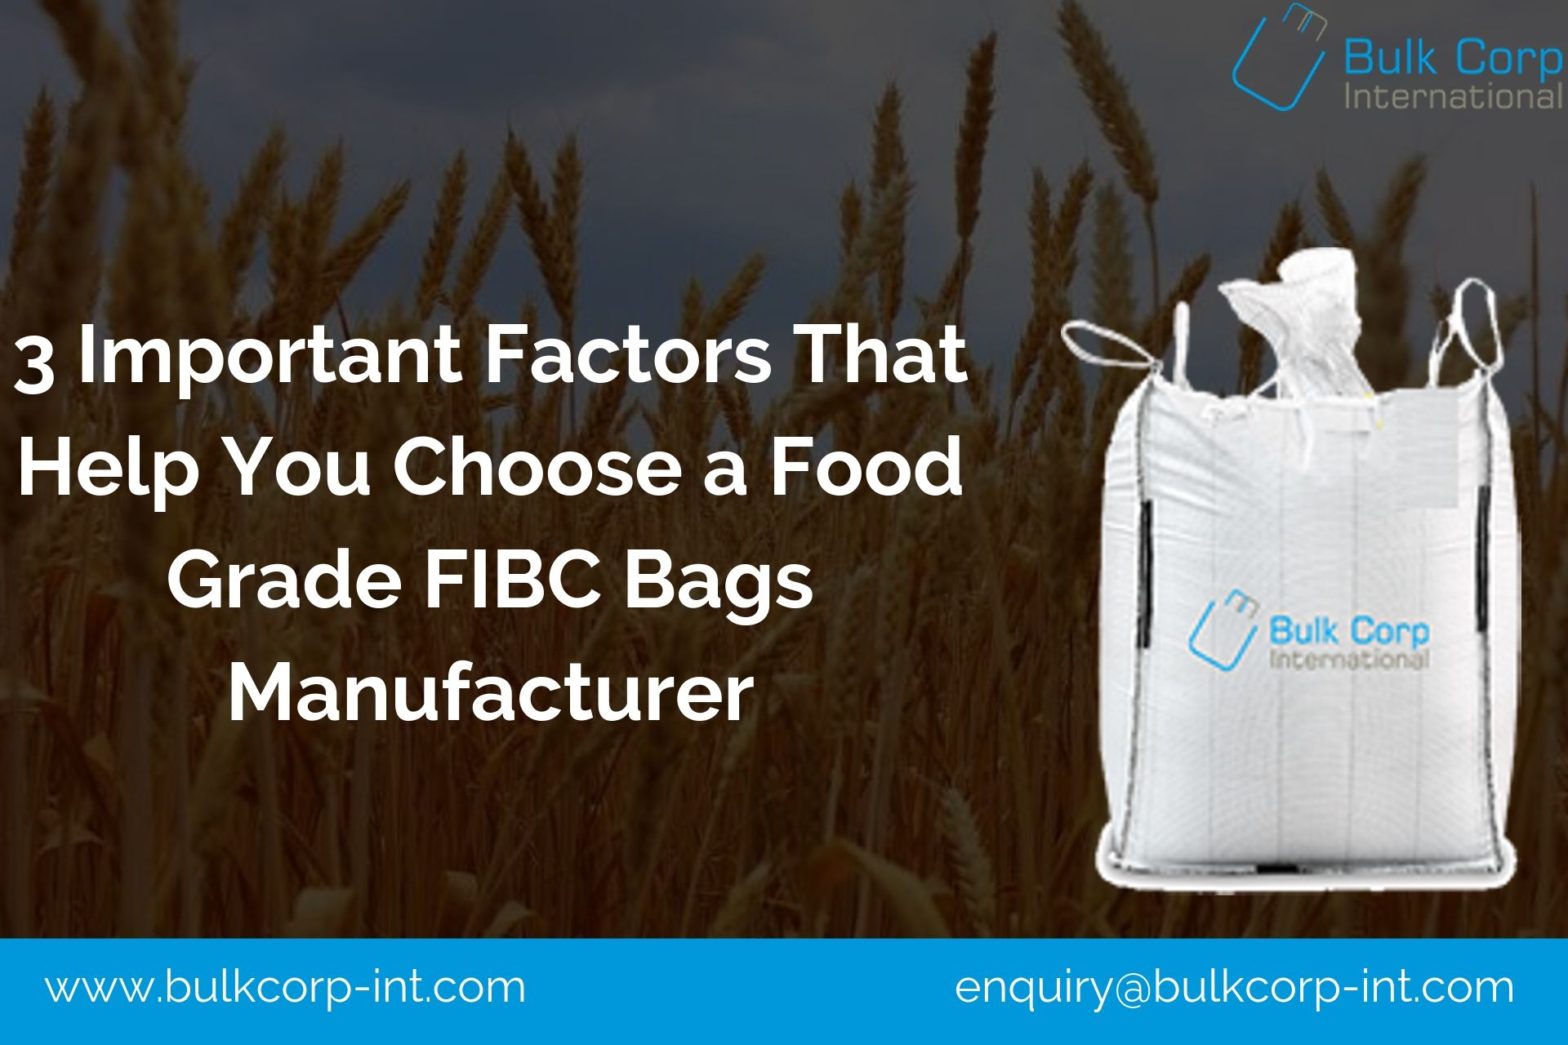 3 Important Factors That Help You Choose a Food Grade FIBC Bags Manufacturer